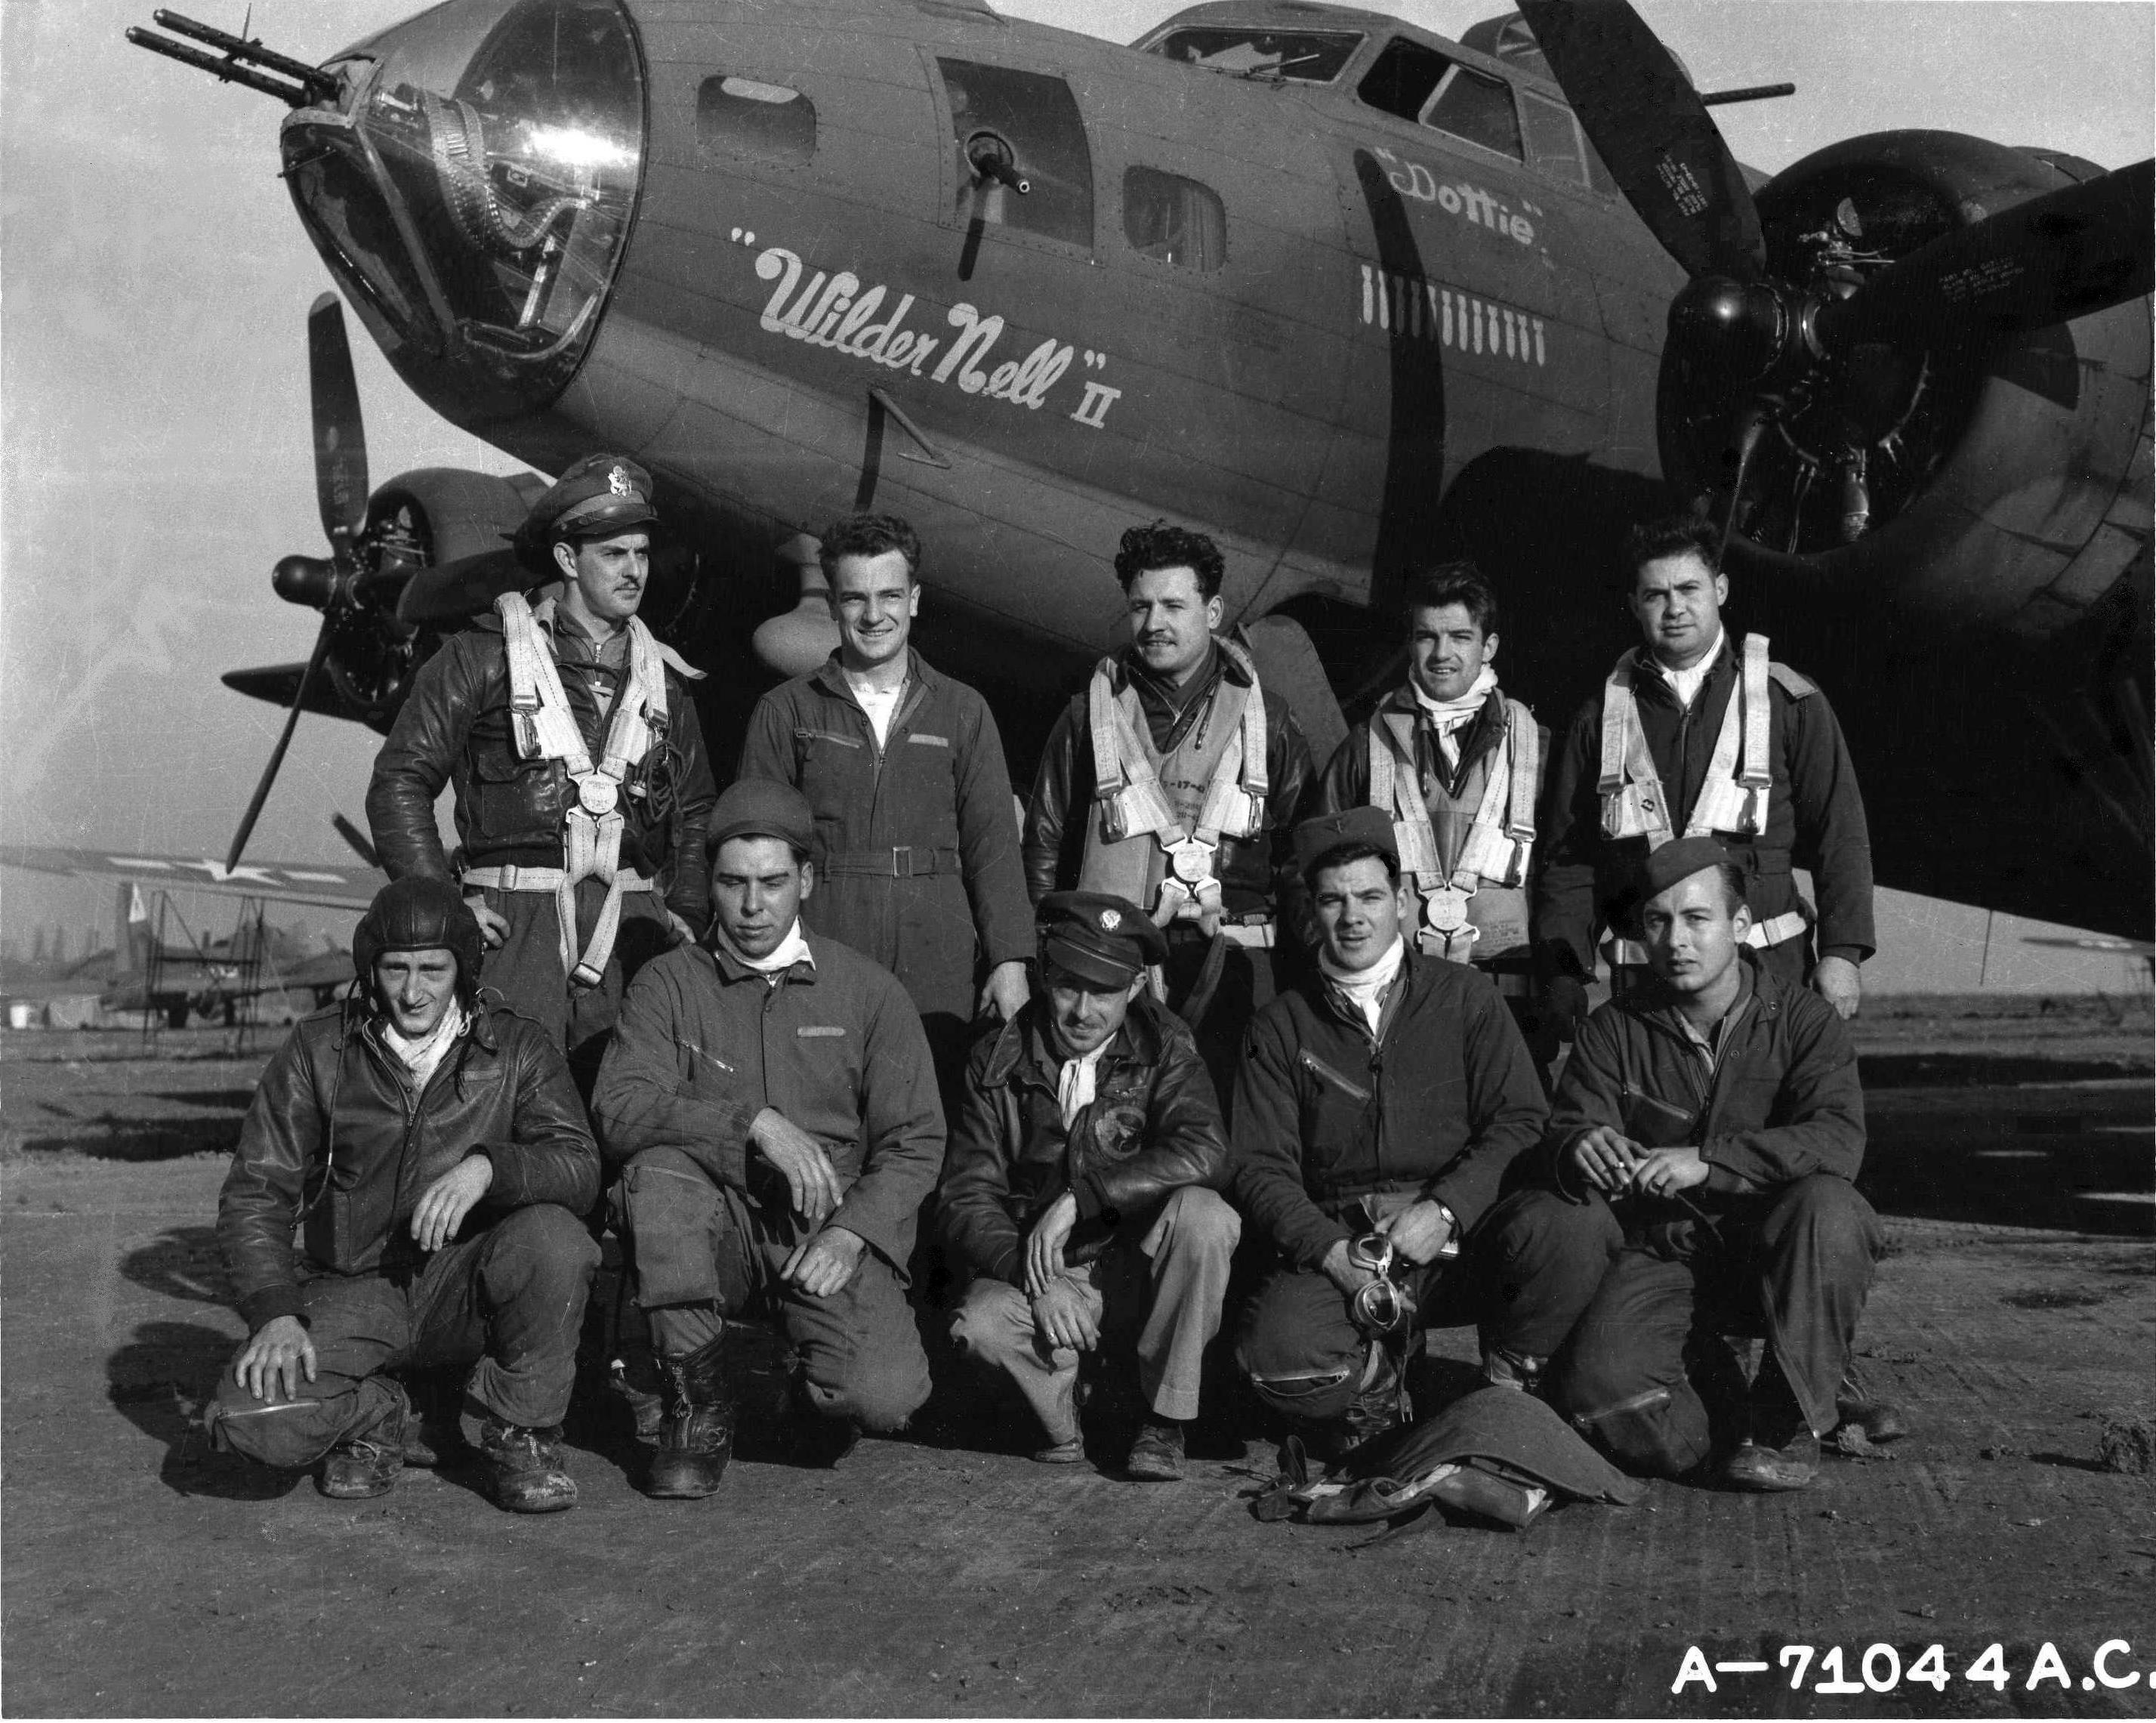 B-17 #42-29787 / Wilder Nell II